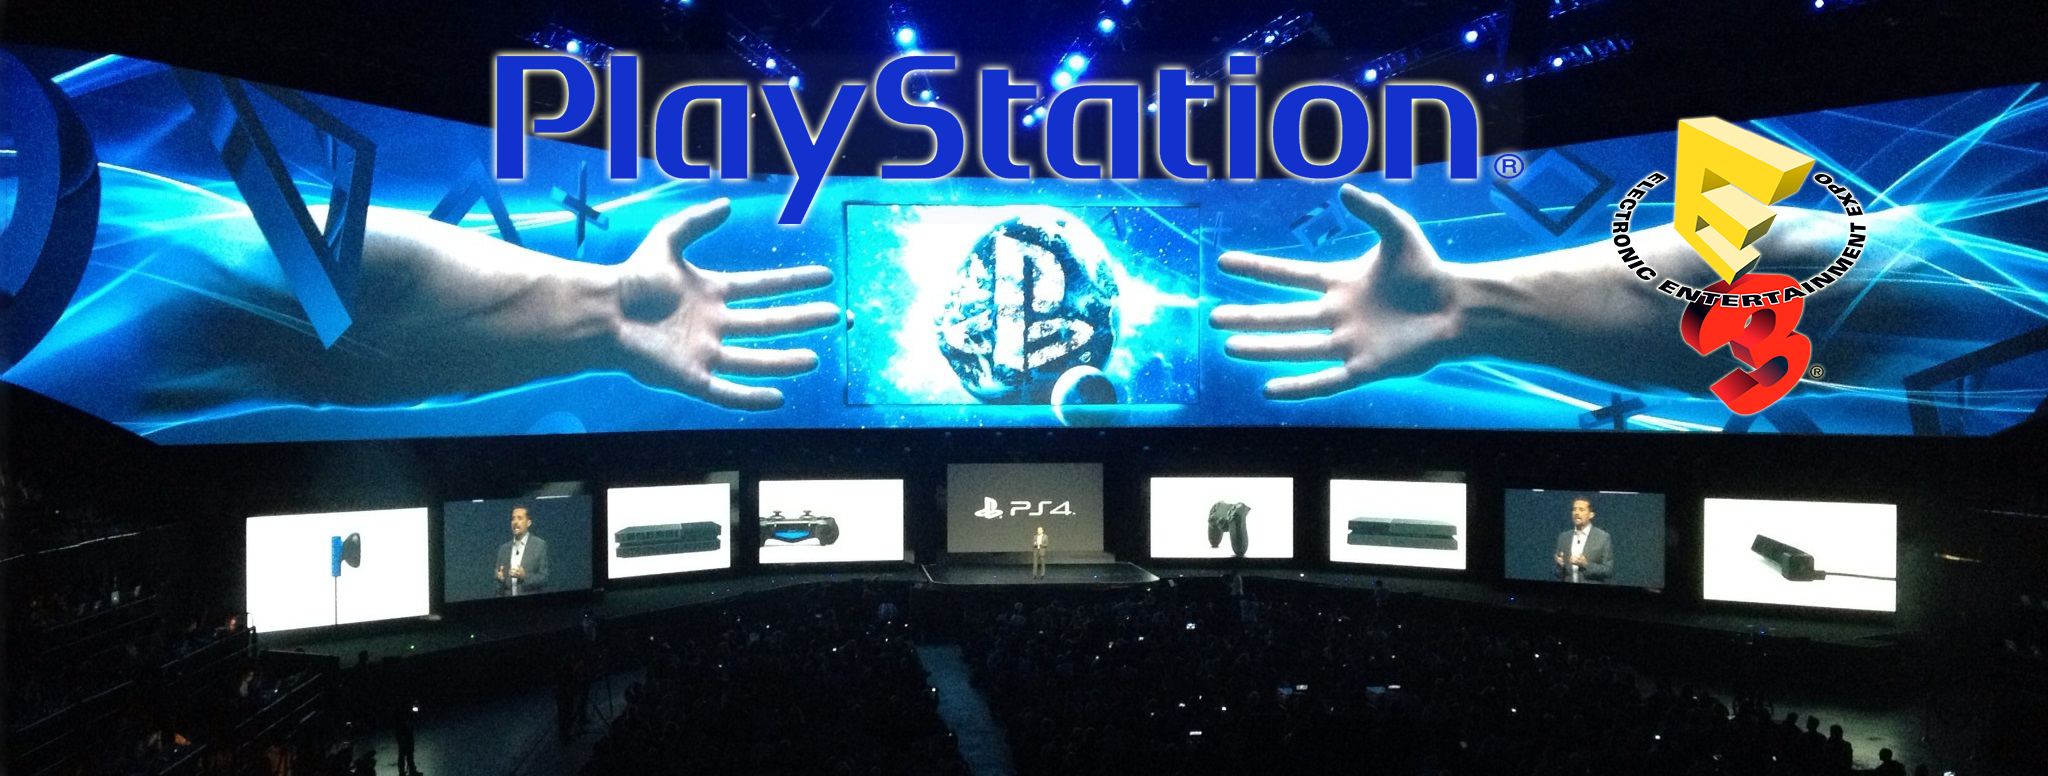 Playstation logo 1 